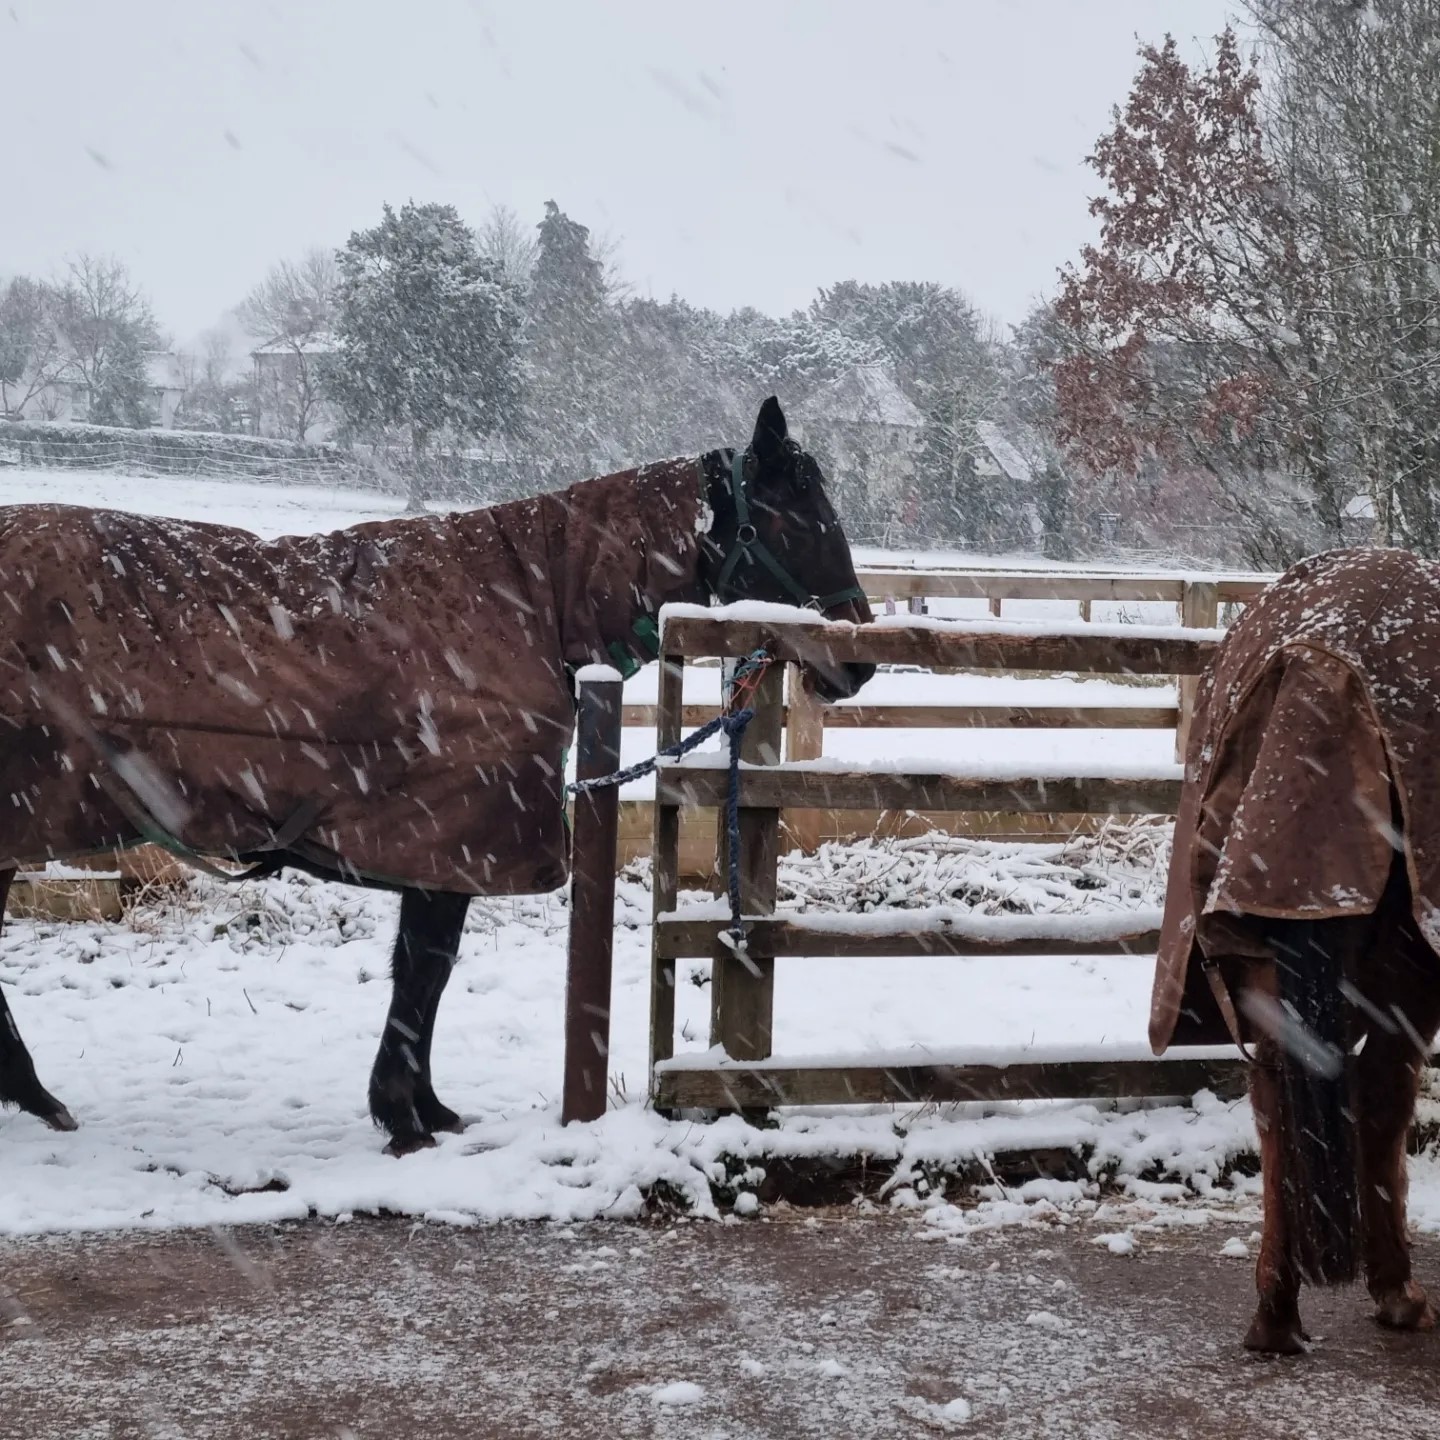 Horse in snow